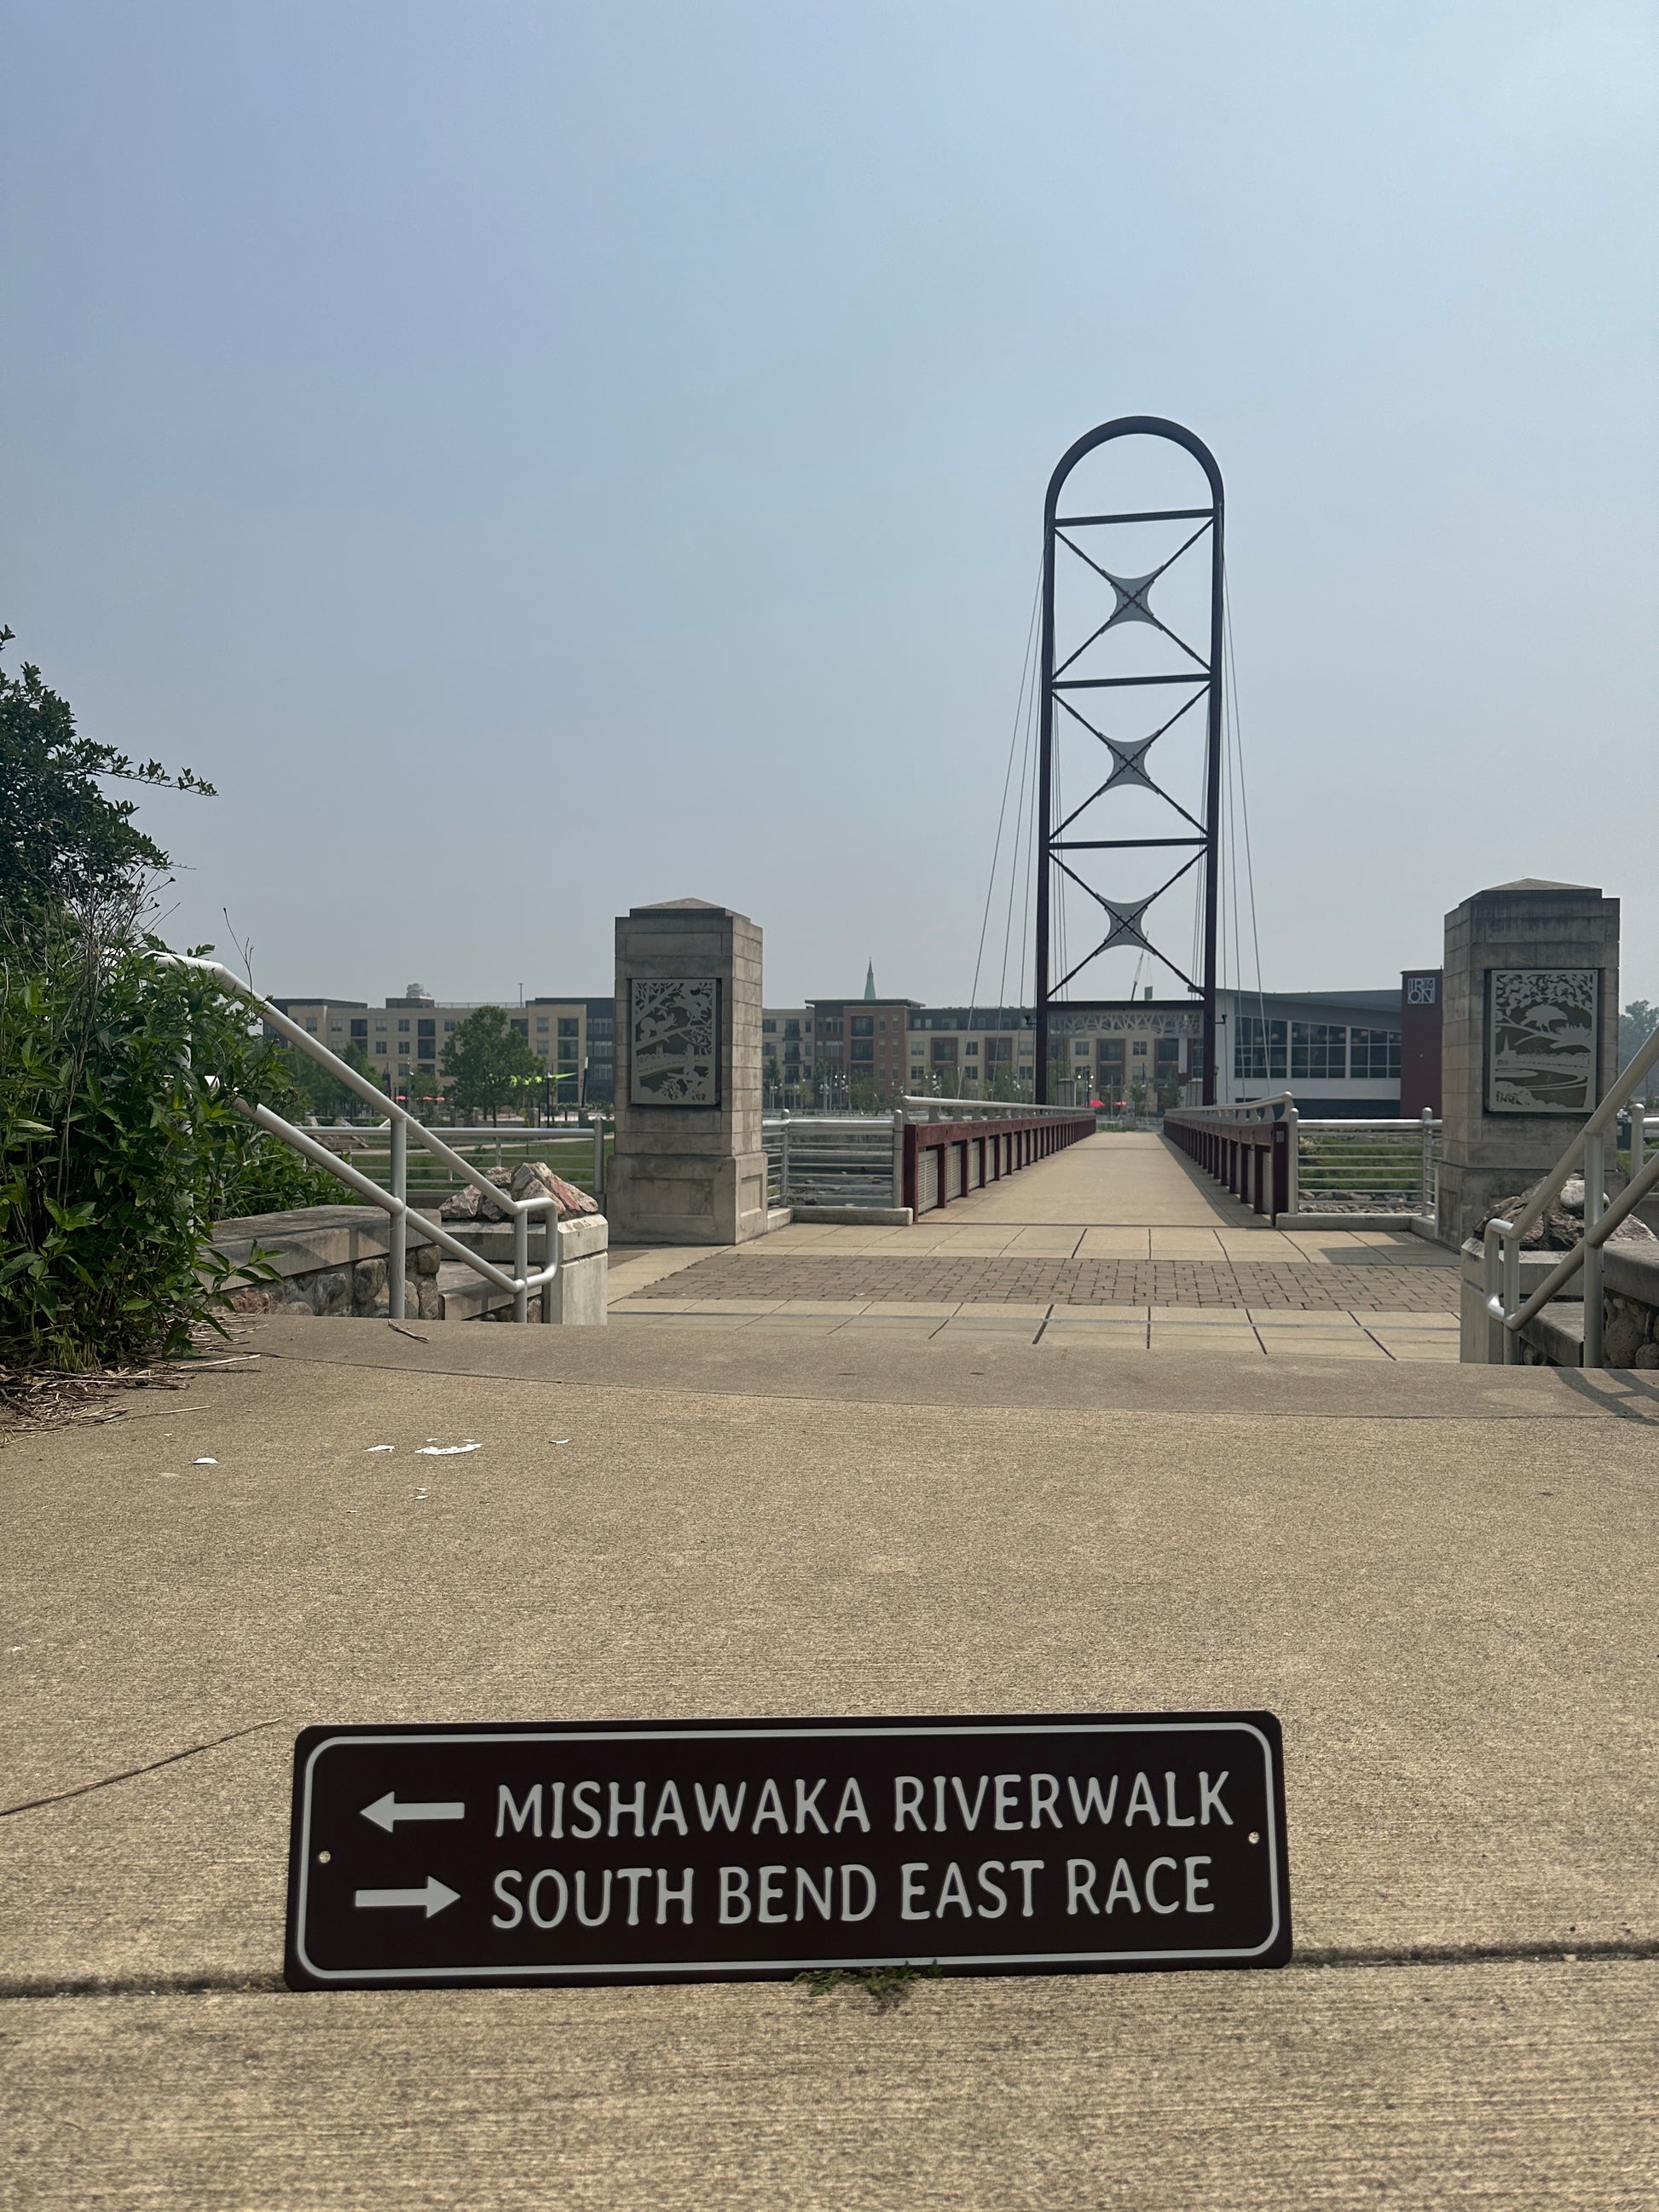 Mishawaka riverwalk south bend east race metal sign